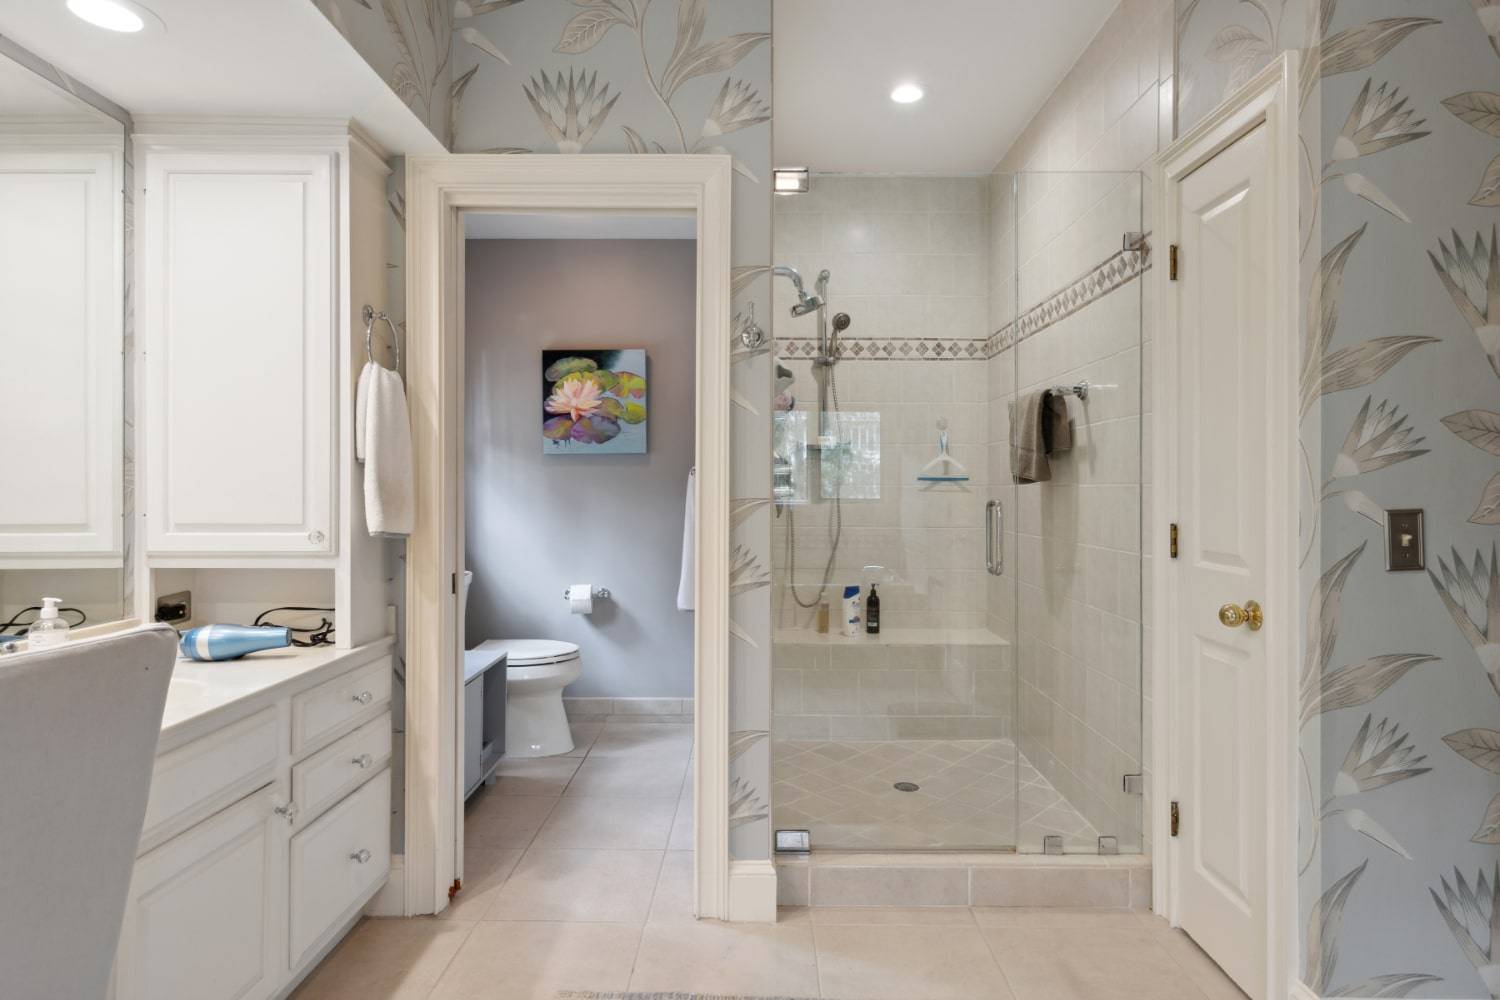 Winslow Design Studio is the Hilton Head Island leader in custom bathroom remodeling